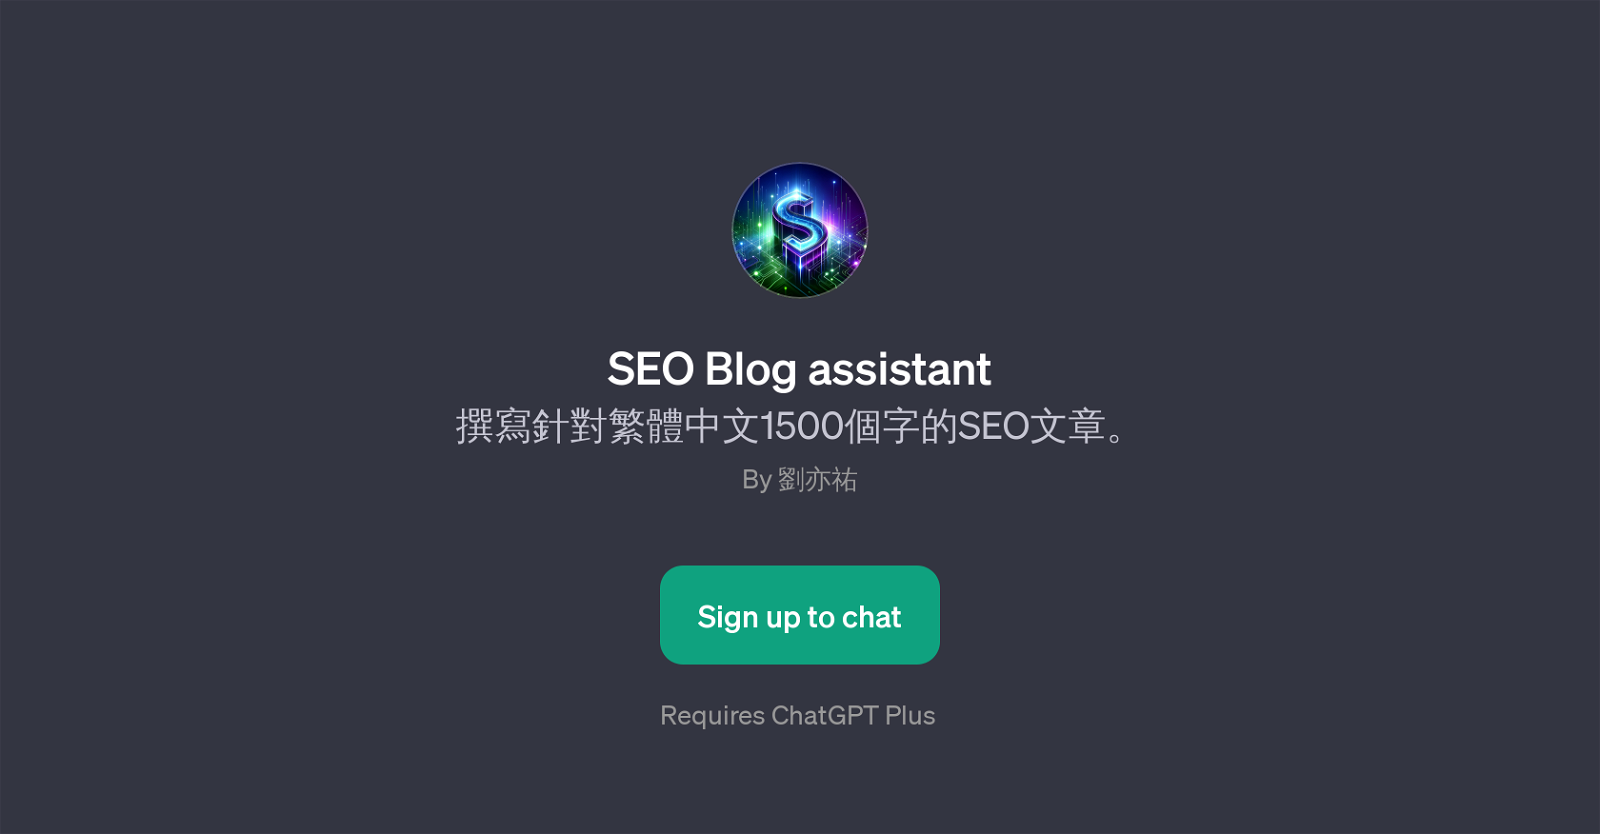 SEO Blog Assistant website